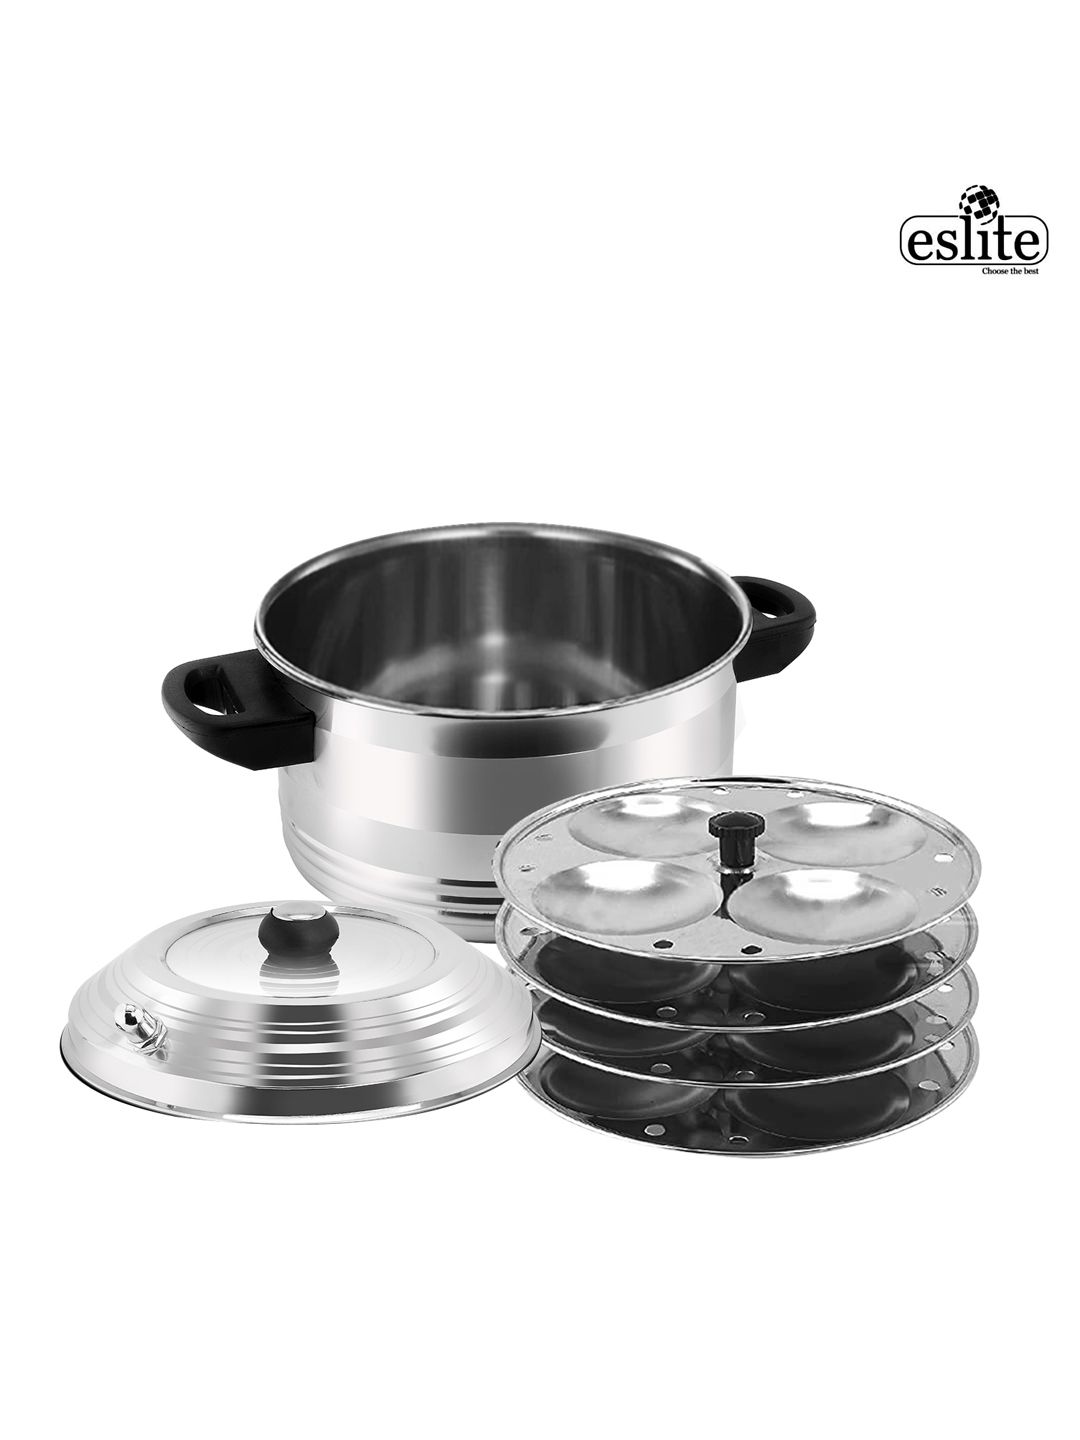 Eslite Stainless Steel Idli Maker Pressure Cooker Steamer 4 Tier Plates 16 Idlis Price in India